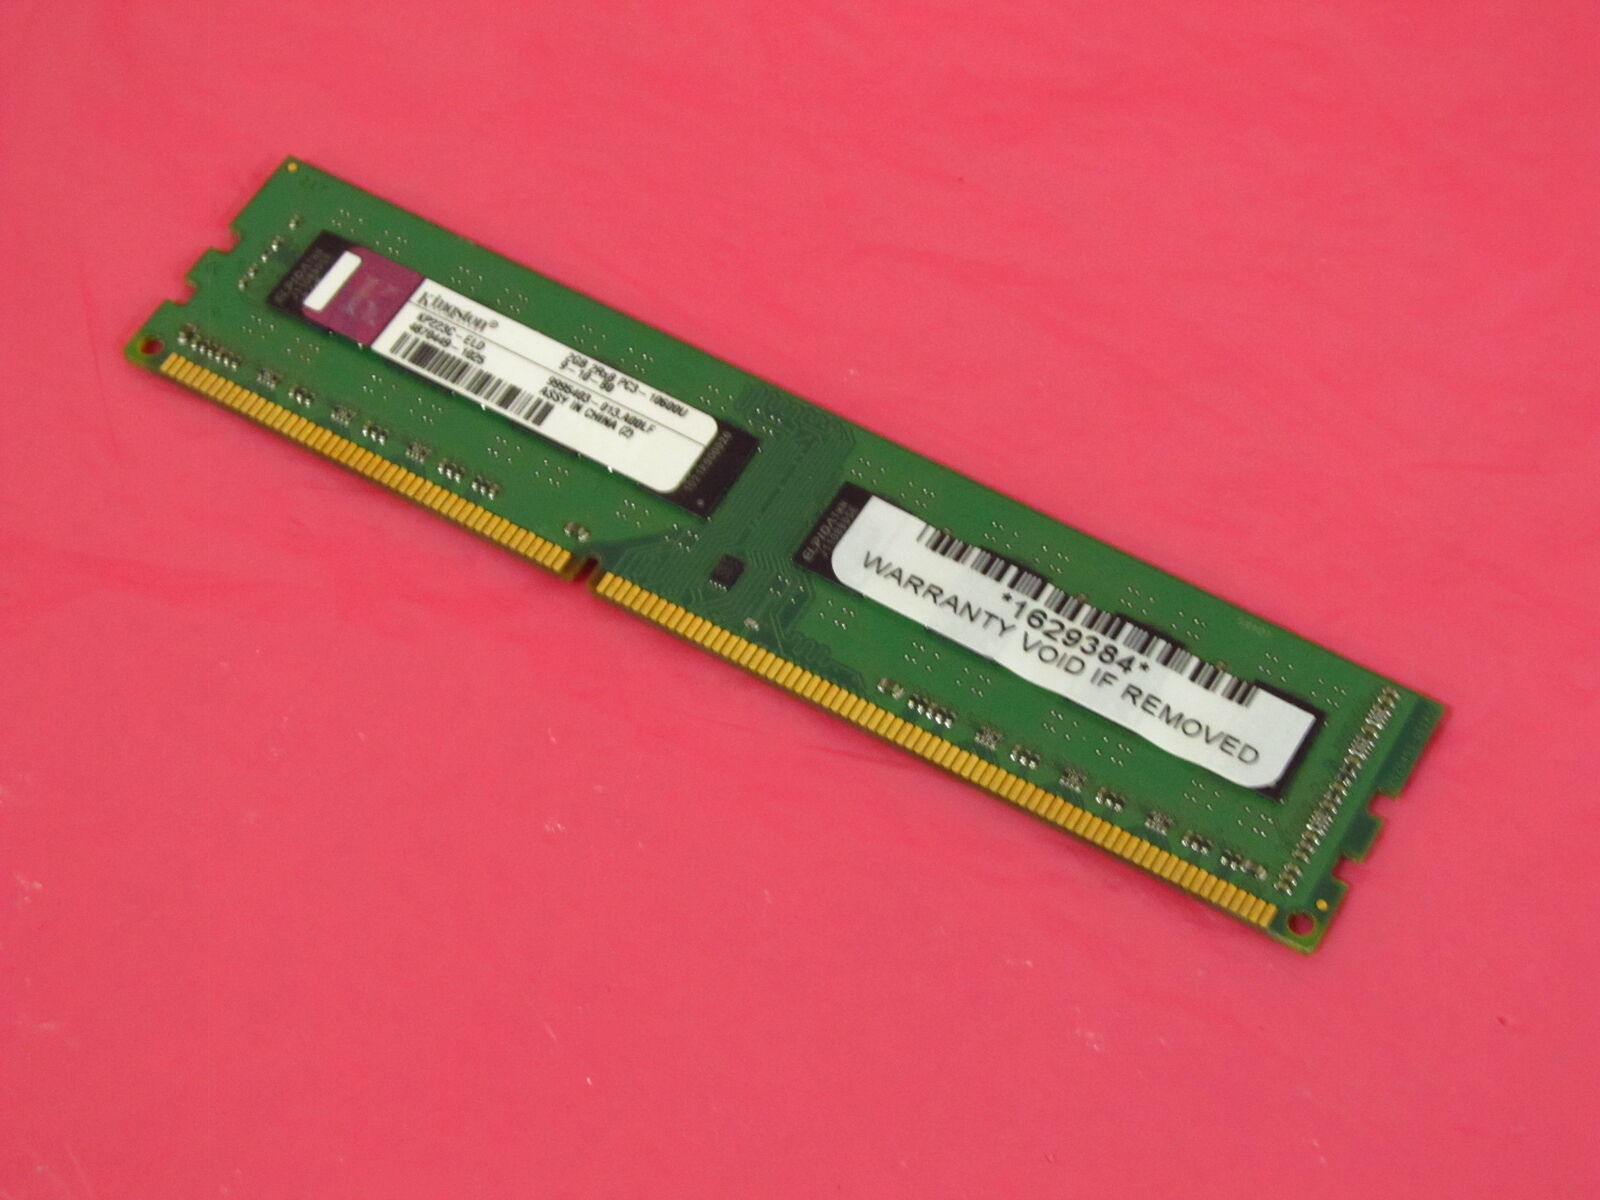 KP223C-ELD Kingston Technology Company 2GB DDR3 10600 MEMORY MODULE